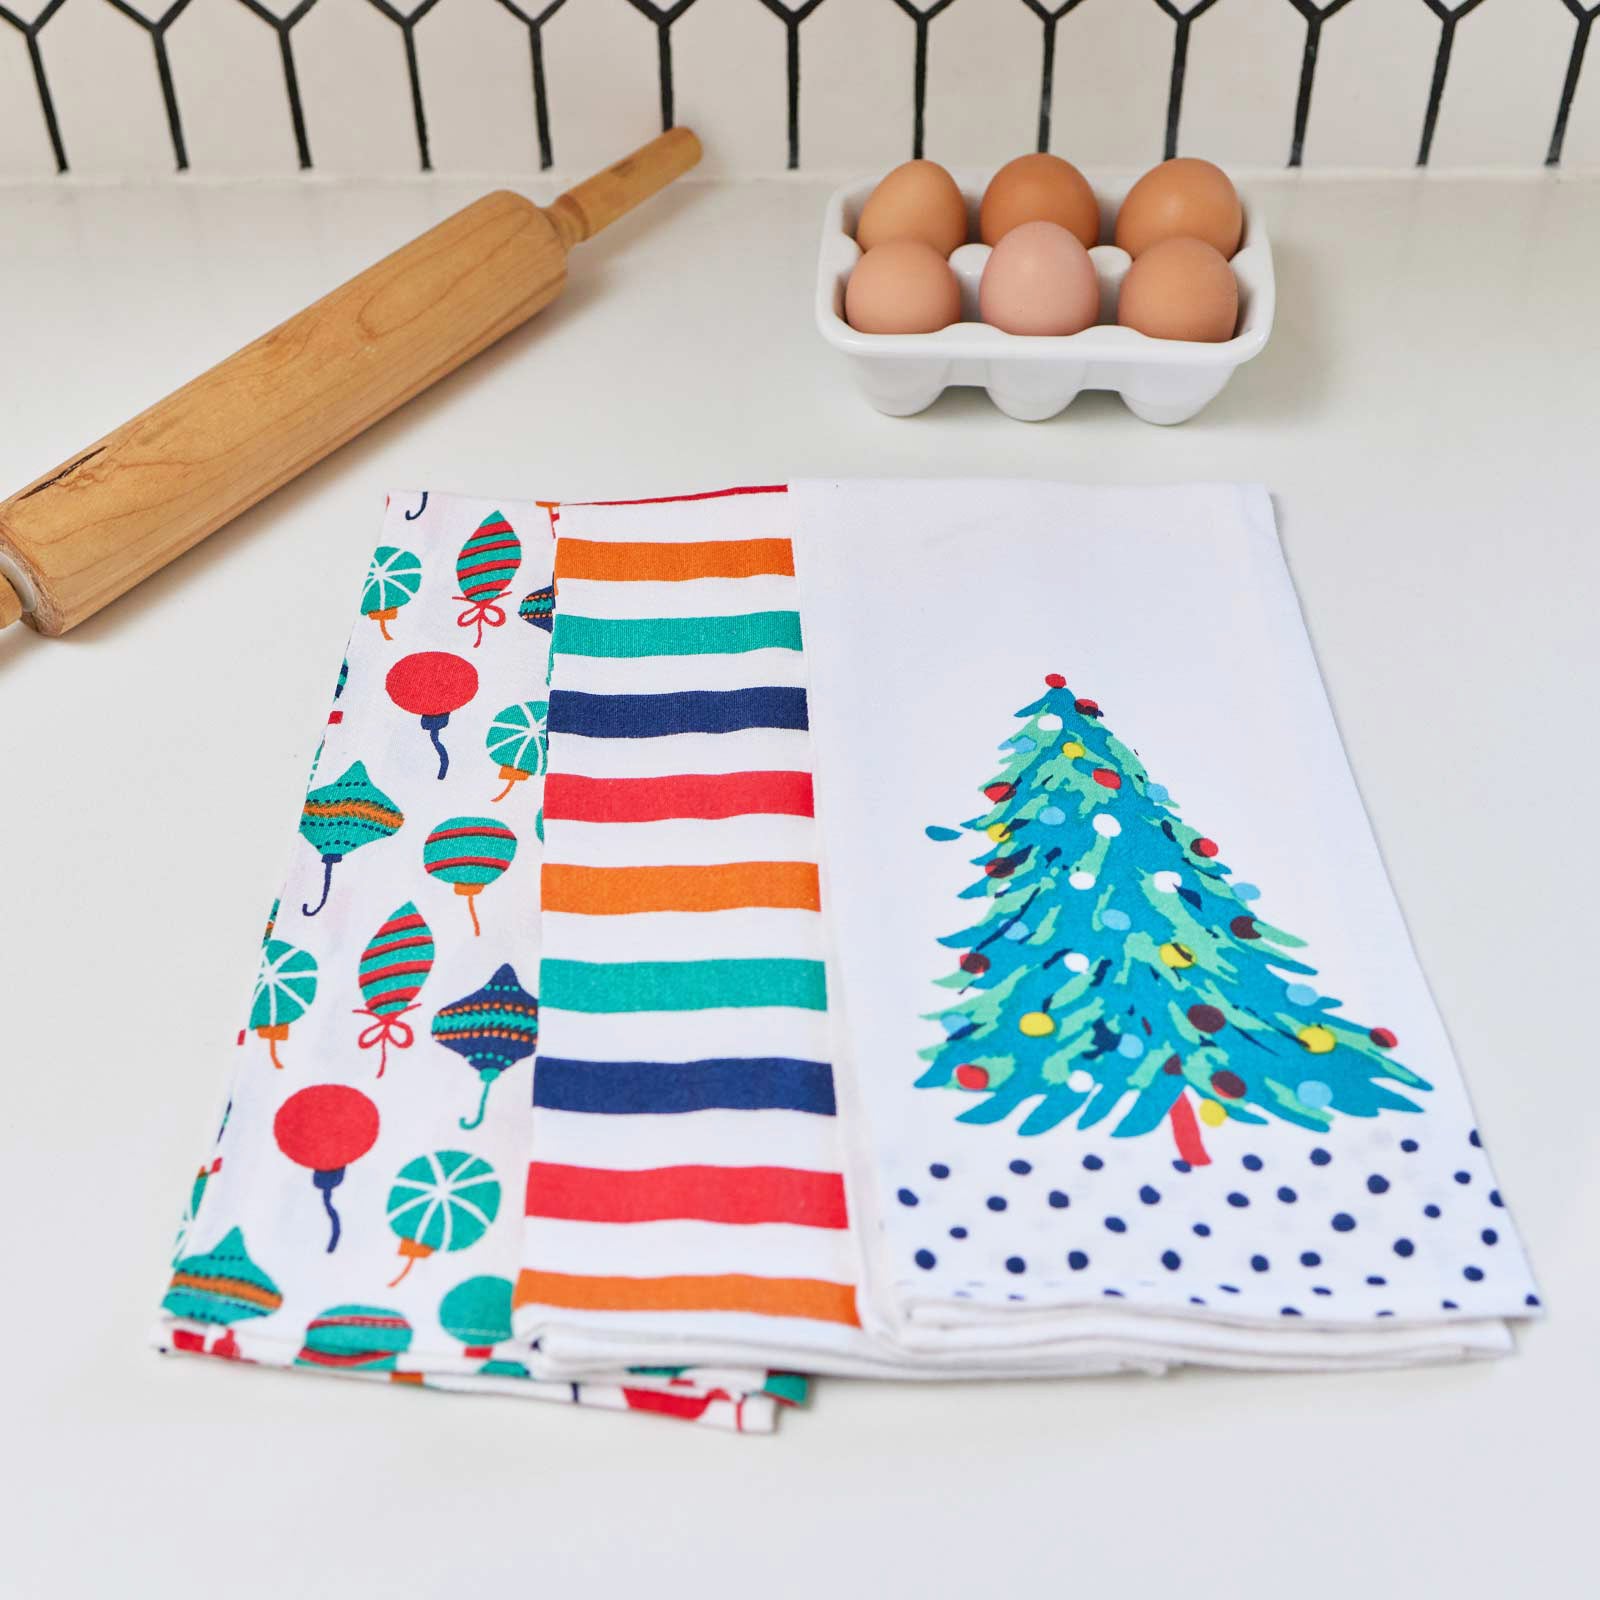 Yuletide Cheer Kitchen Towels & Dish Cloth Set